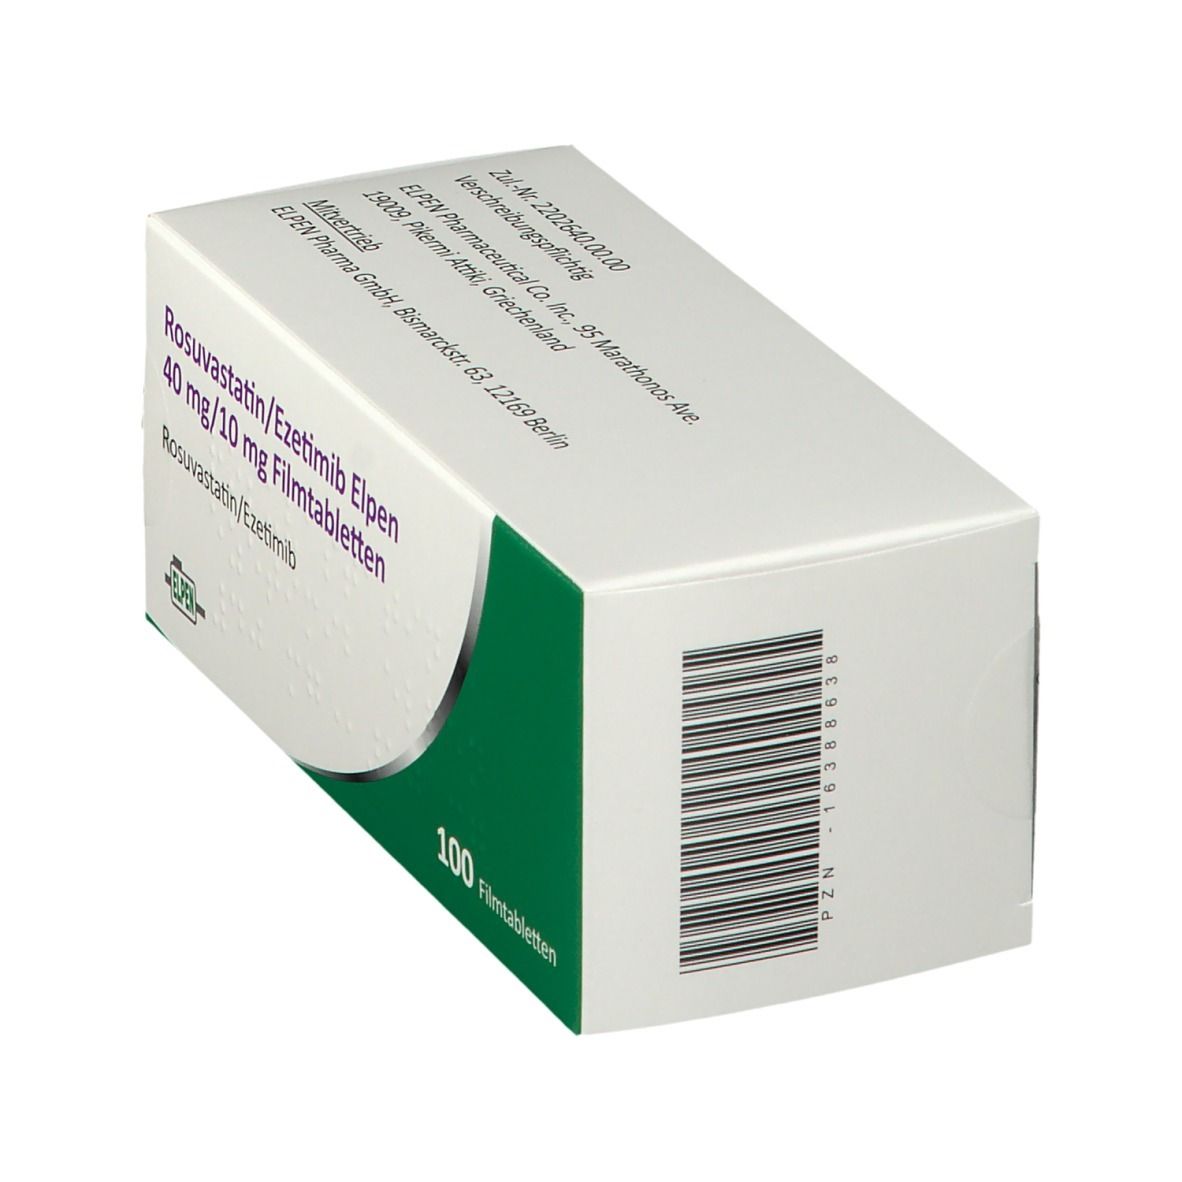 Rosuvastatin/Ezetimib Elpen 40 mg/10 mg